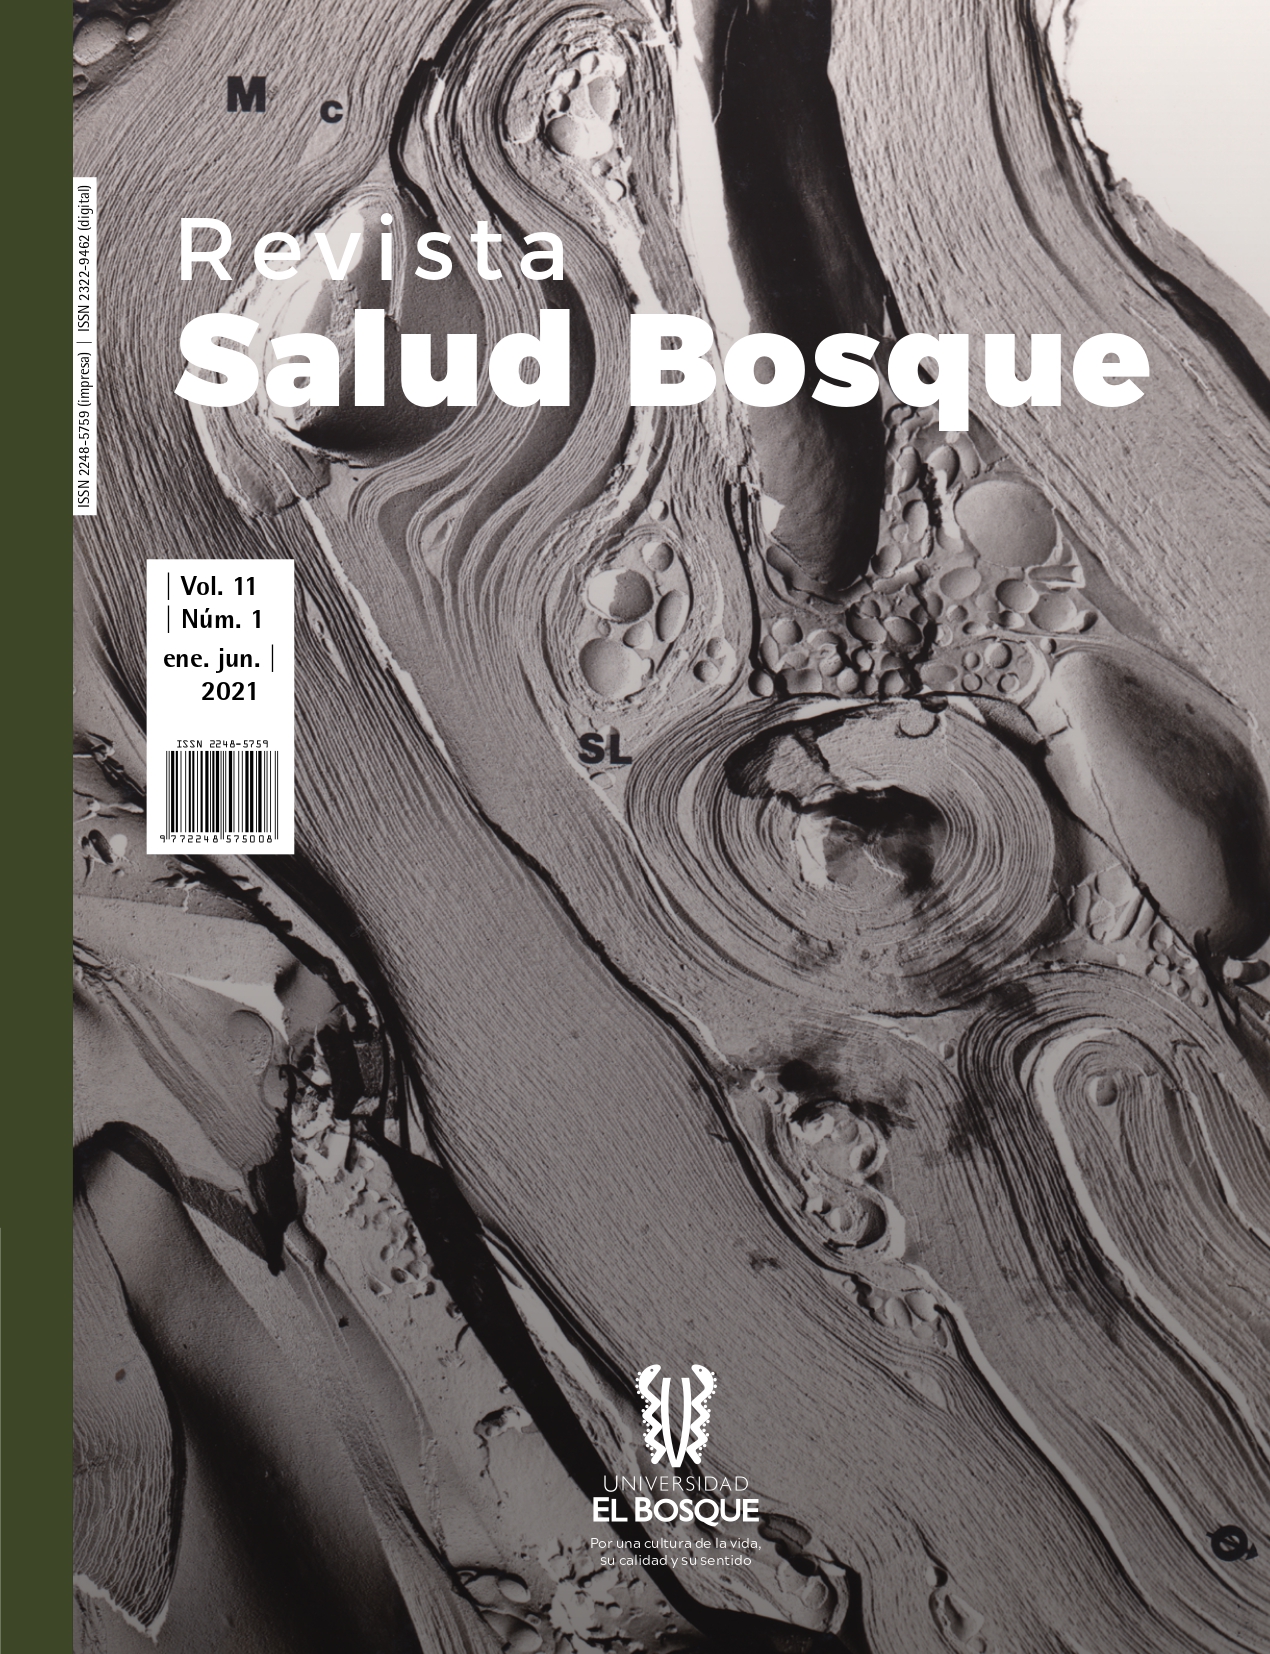 					Visualizar v. 11 n. 1 (2021): Revista Salud Bosque
				